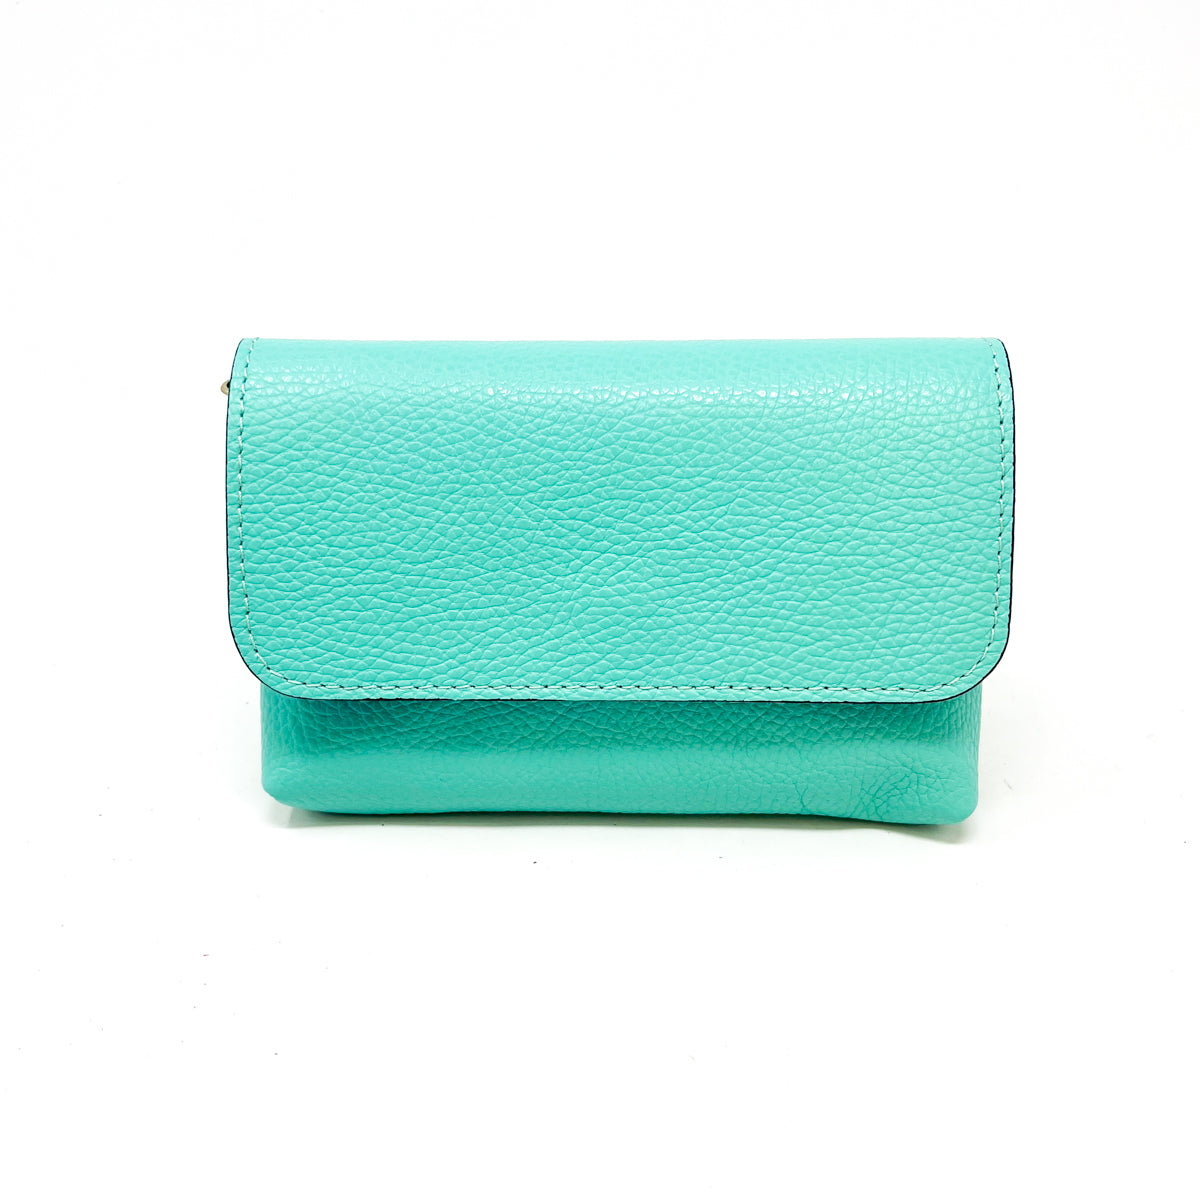 Small Foldover Bag in Tiffany Blue